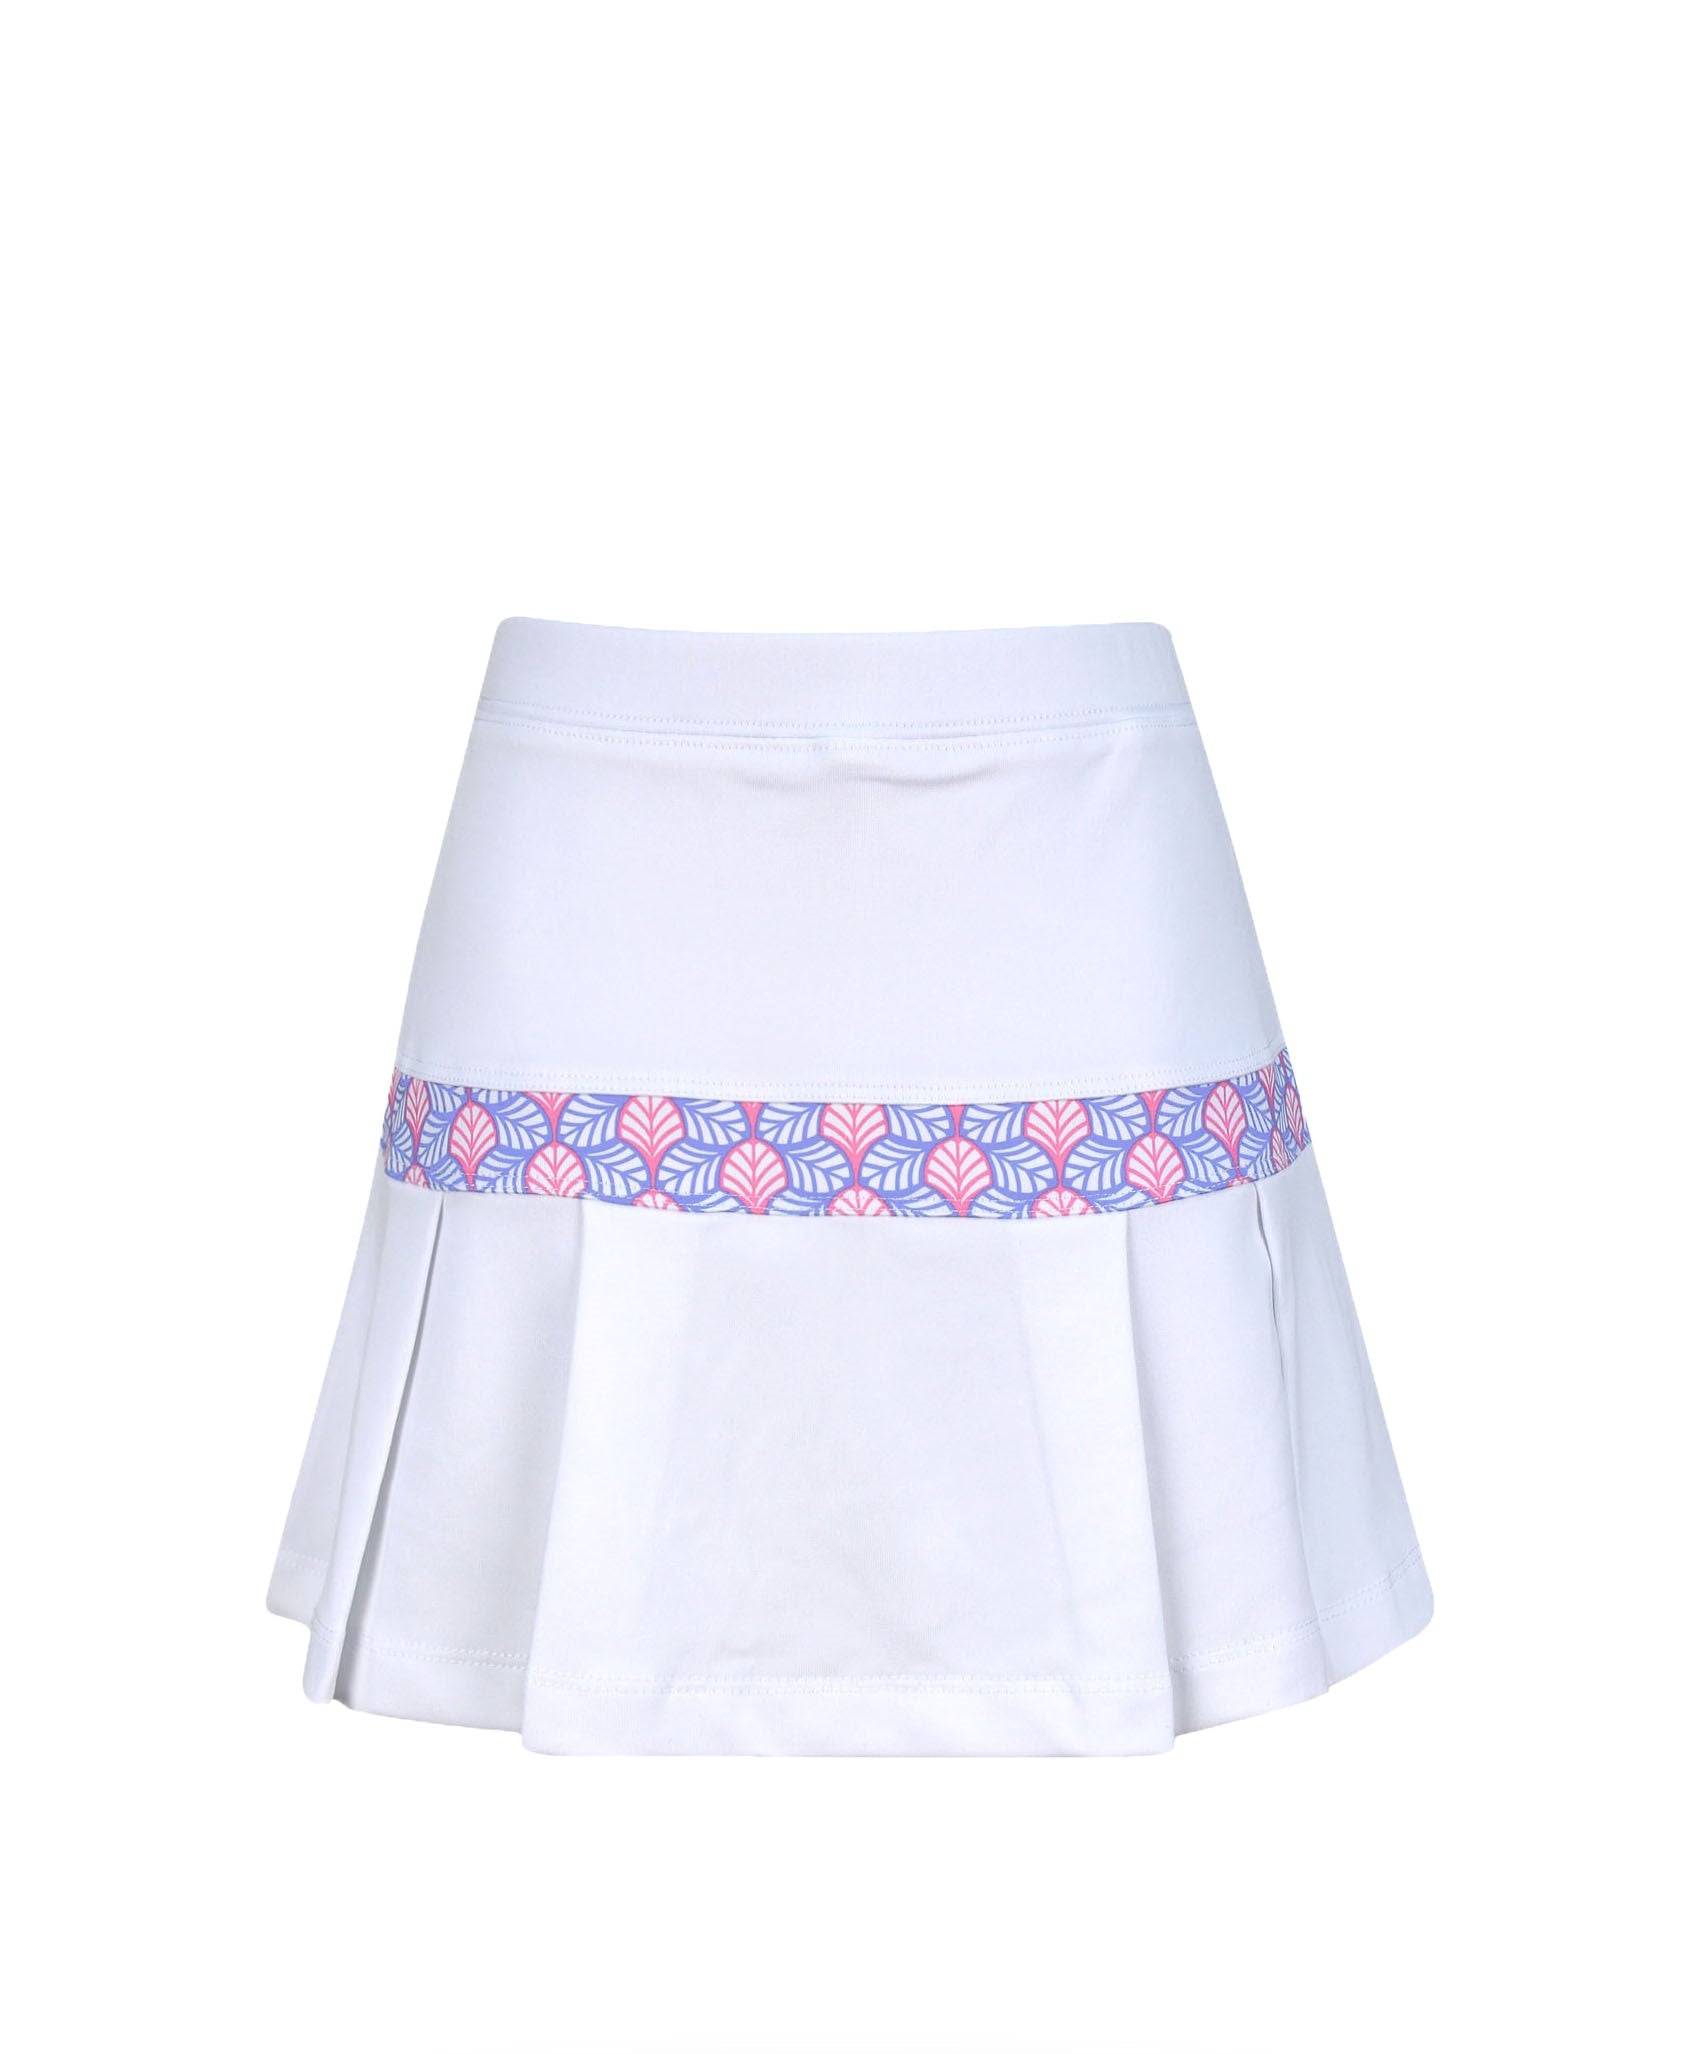 #Hula in Hawaii Skirt White - Little Miss Tennis